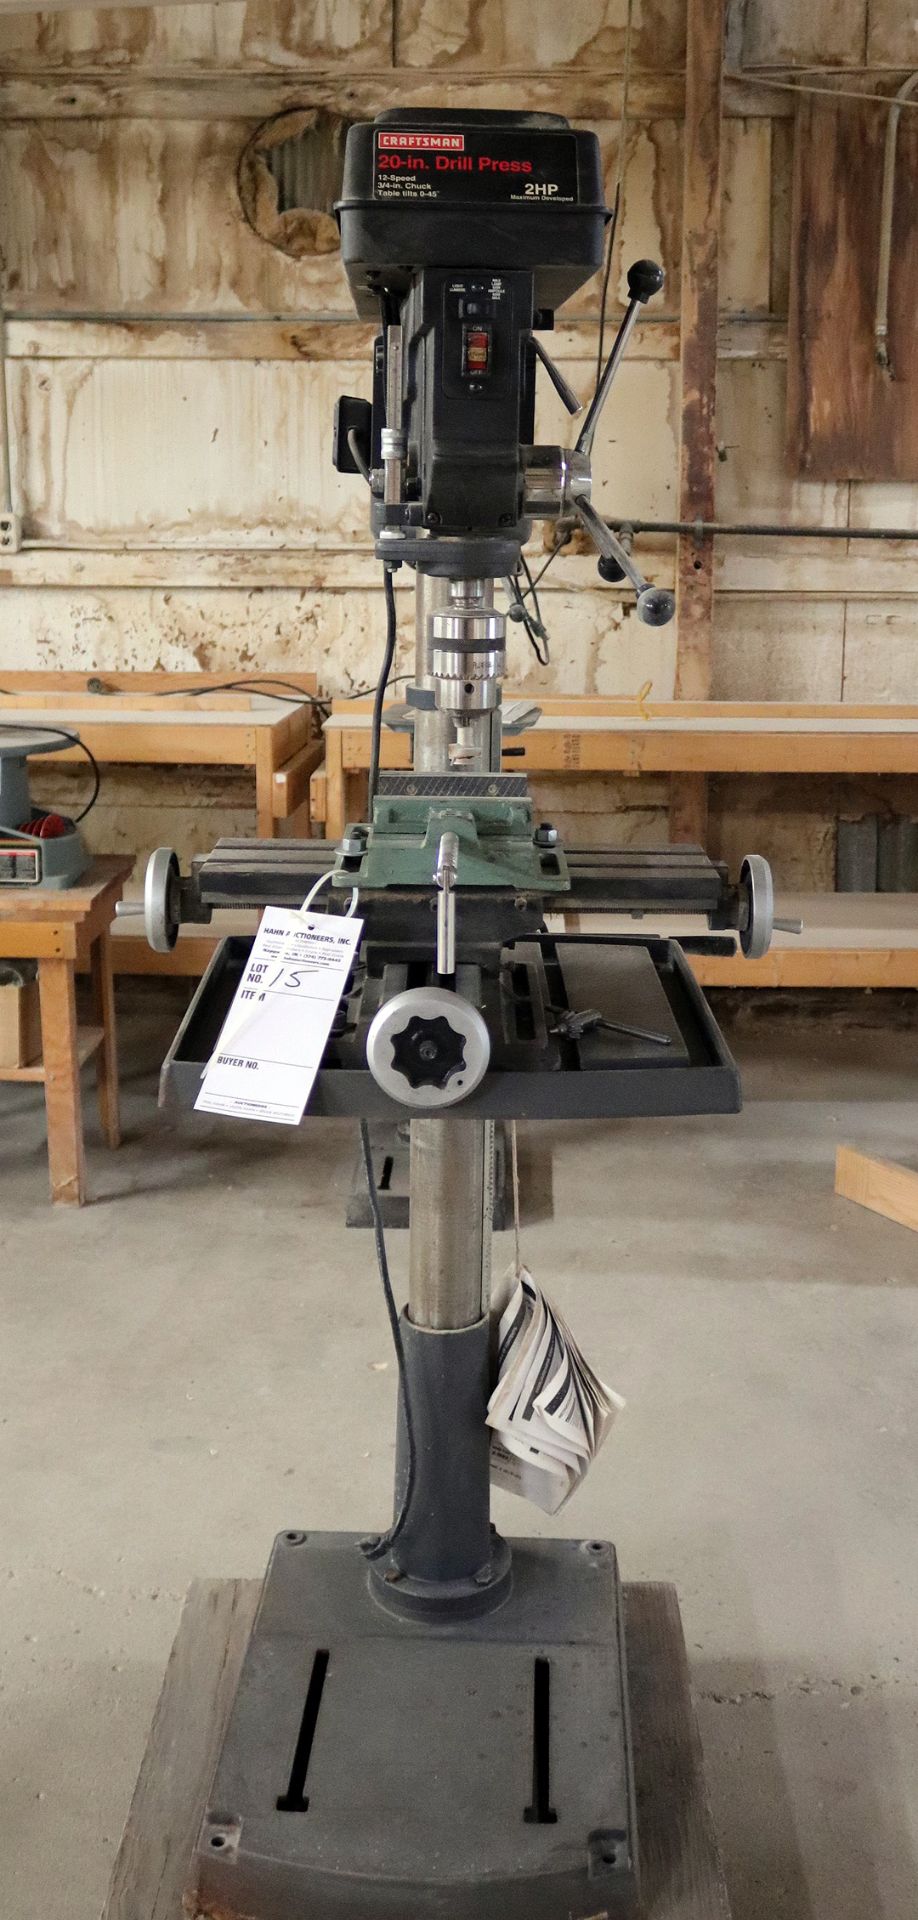 Craftsman 20" 2hp floor model drill press with vises, excellent